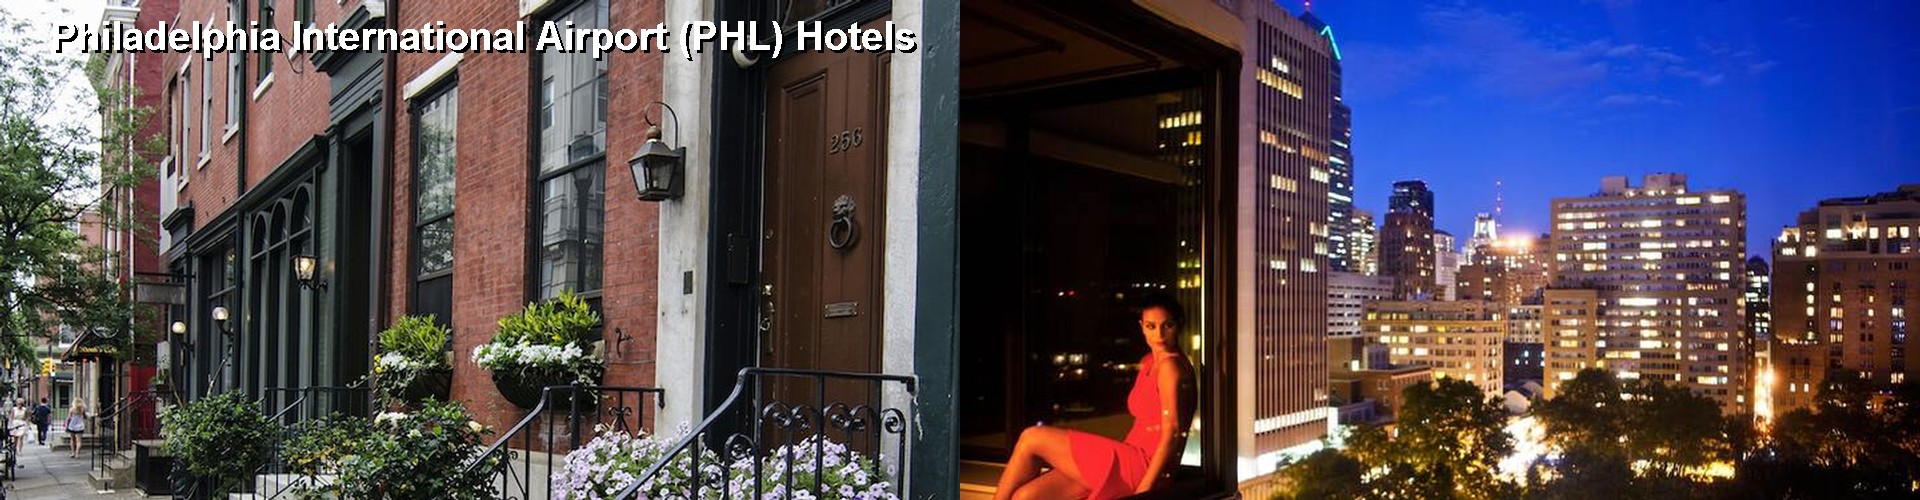 3 Best Hotels near Philadelphia International Airport (PHL)